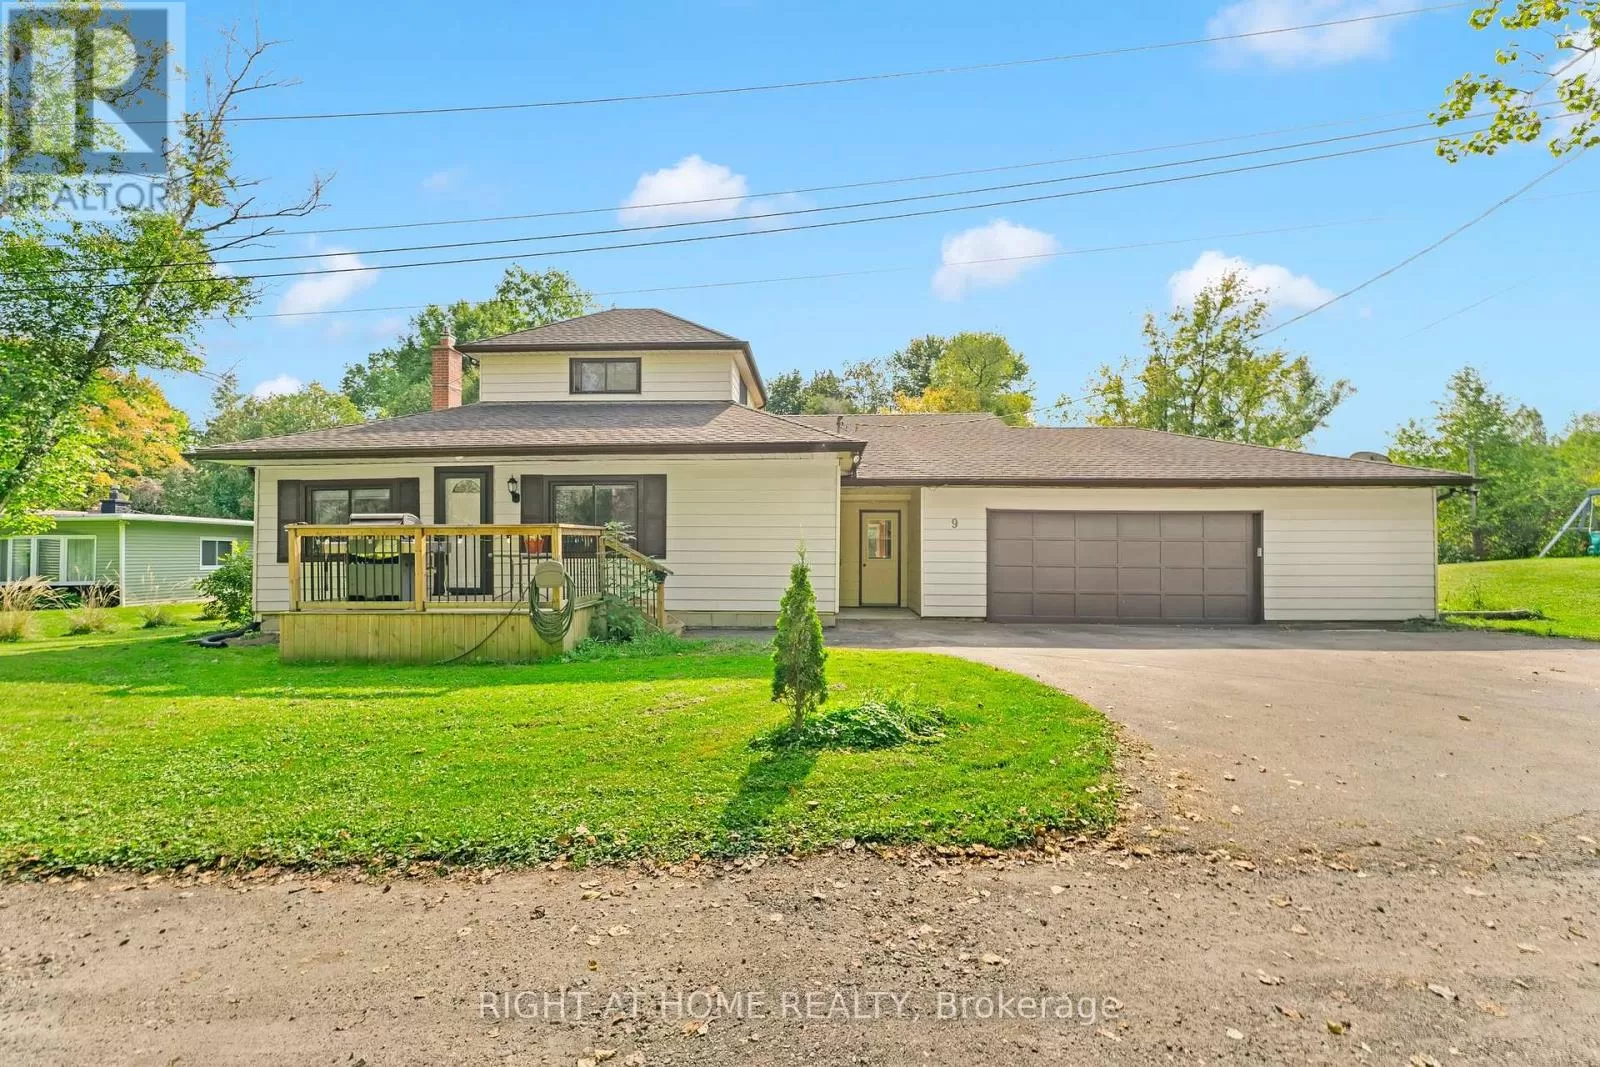 House for rent: 9 Birch Tr, Puslinch, Ontario N3C 2V4